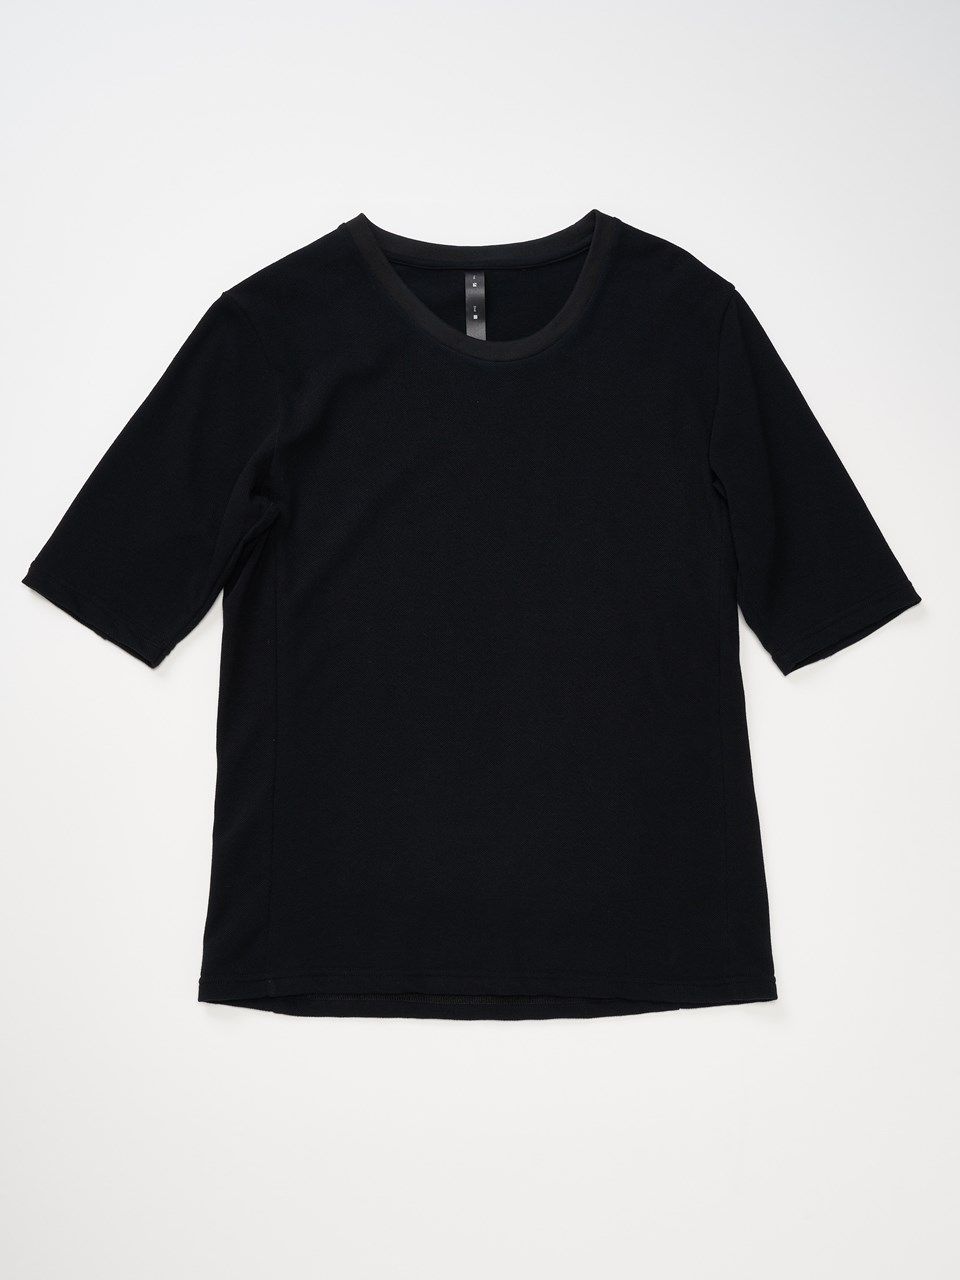 wjk - half sleeve KANOKO 鹿の子cut&sewn / Tシャツ / ブラック